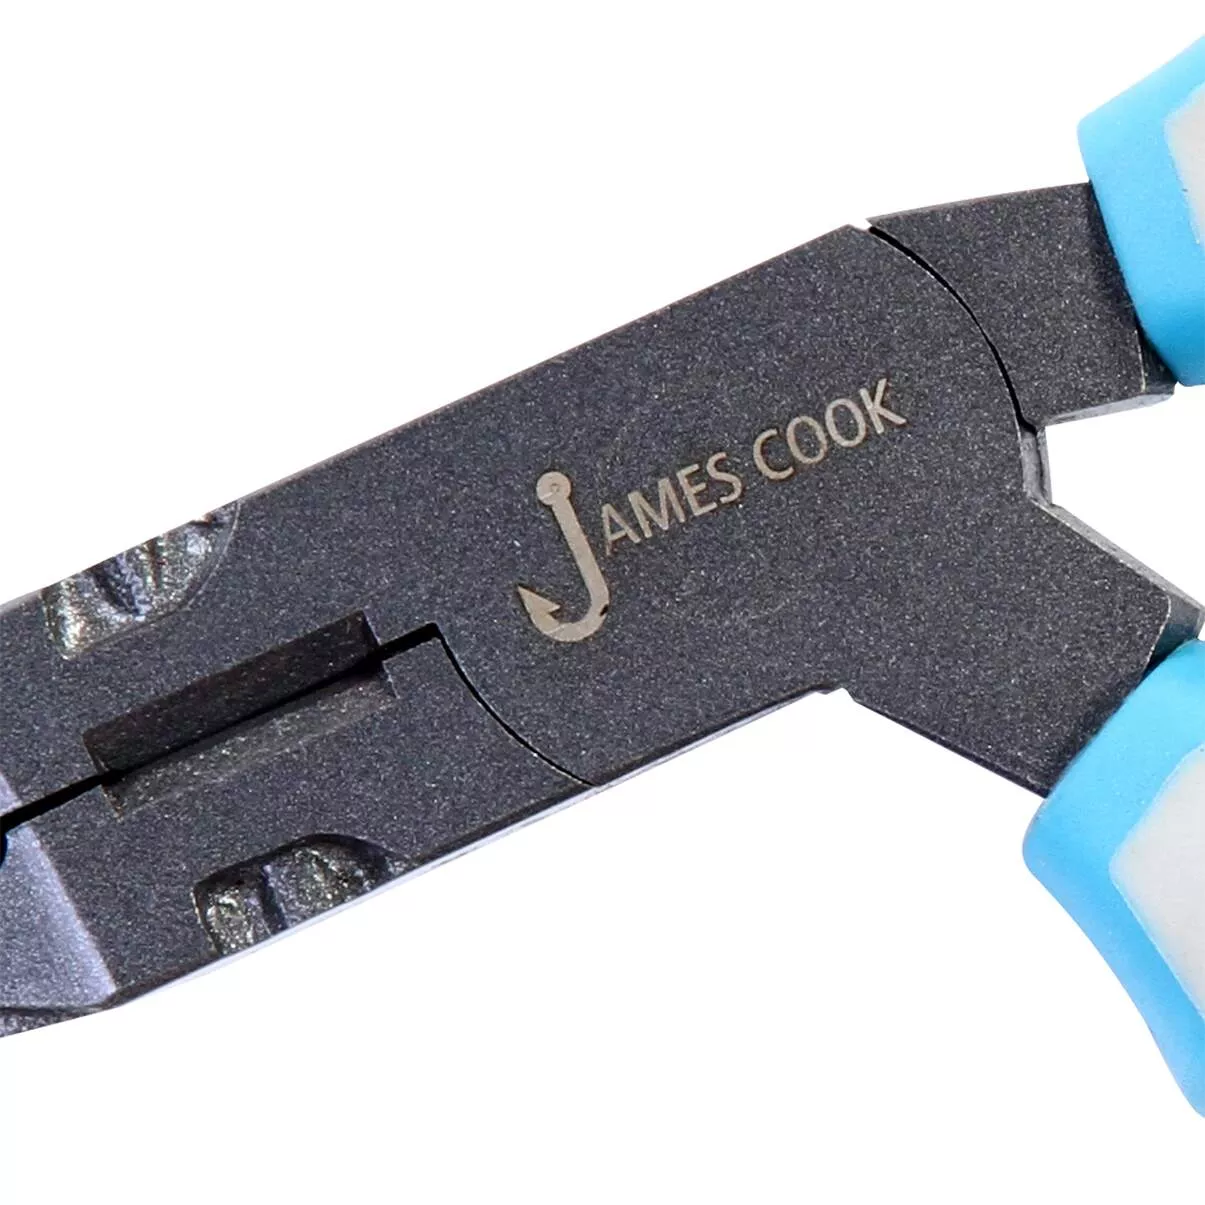 JAMES COOK Premium Anglerzange aus Chrom-Vanadium-Stahl, ergonomisch geformt 17,8cm